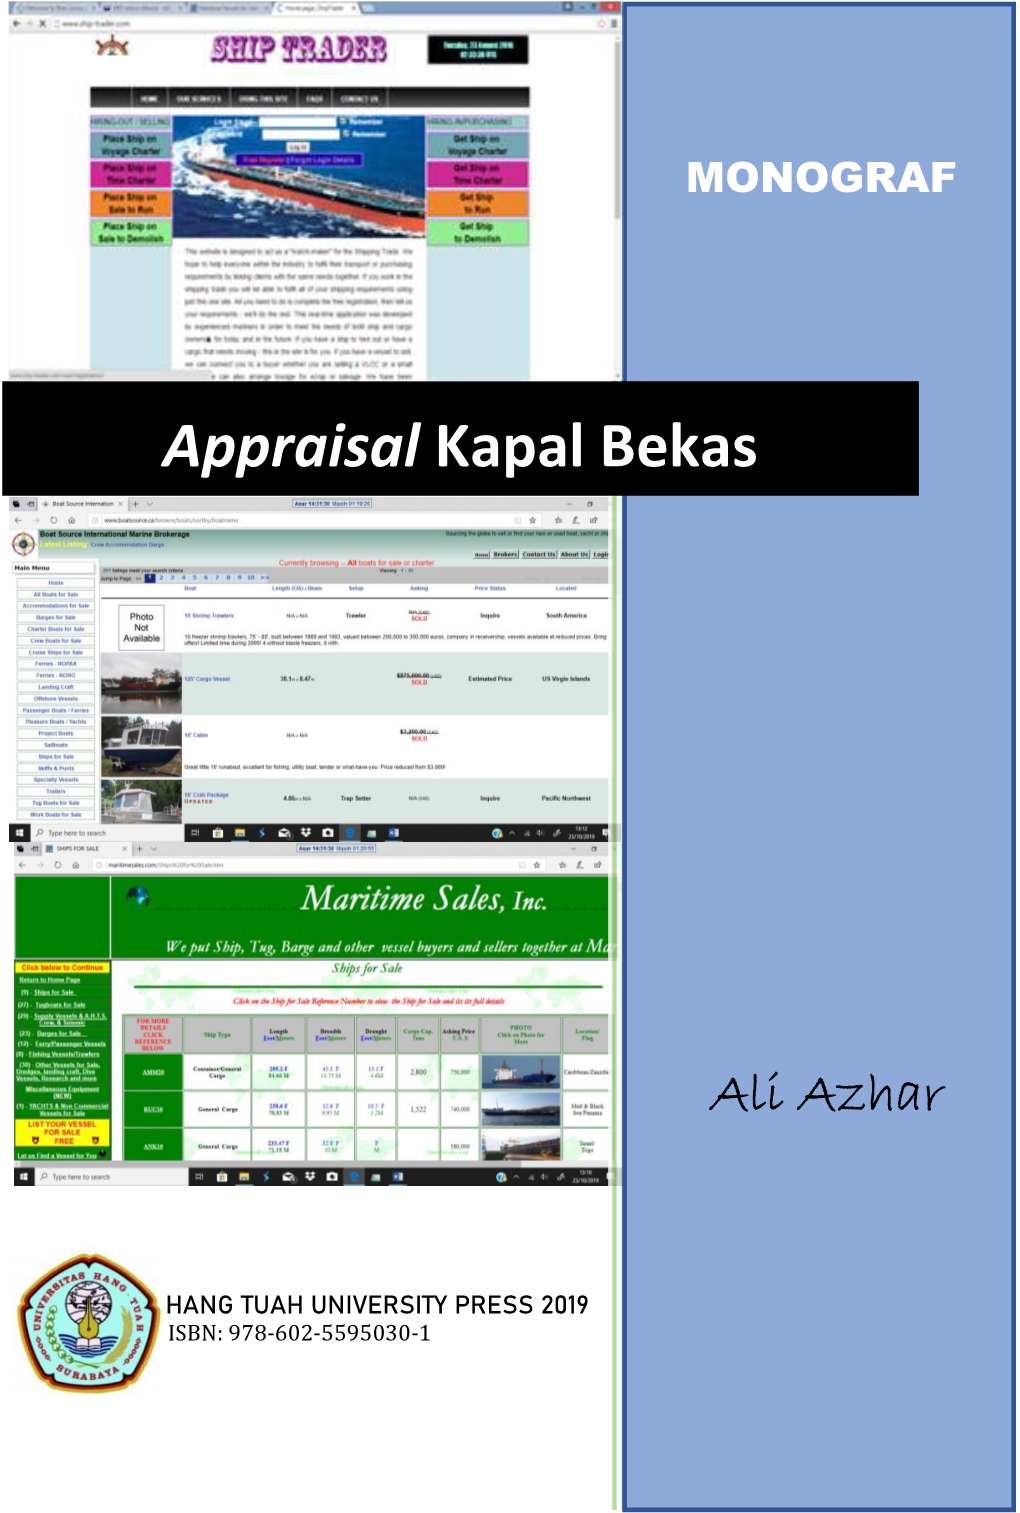 Appraisal Kapal Bekas